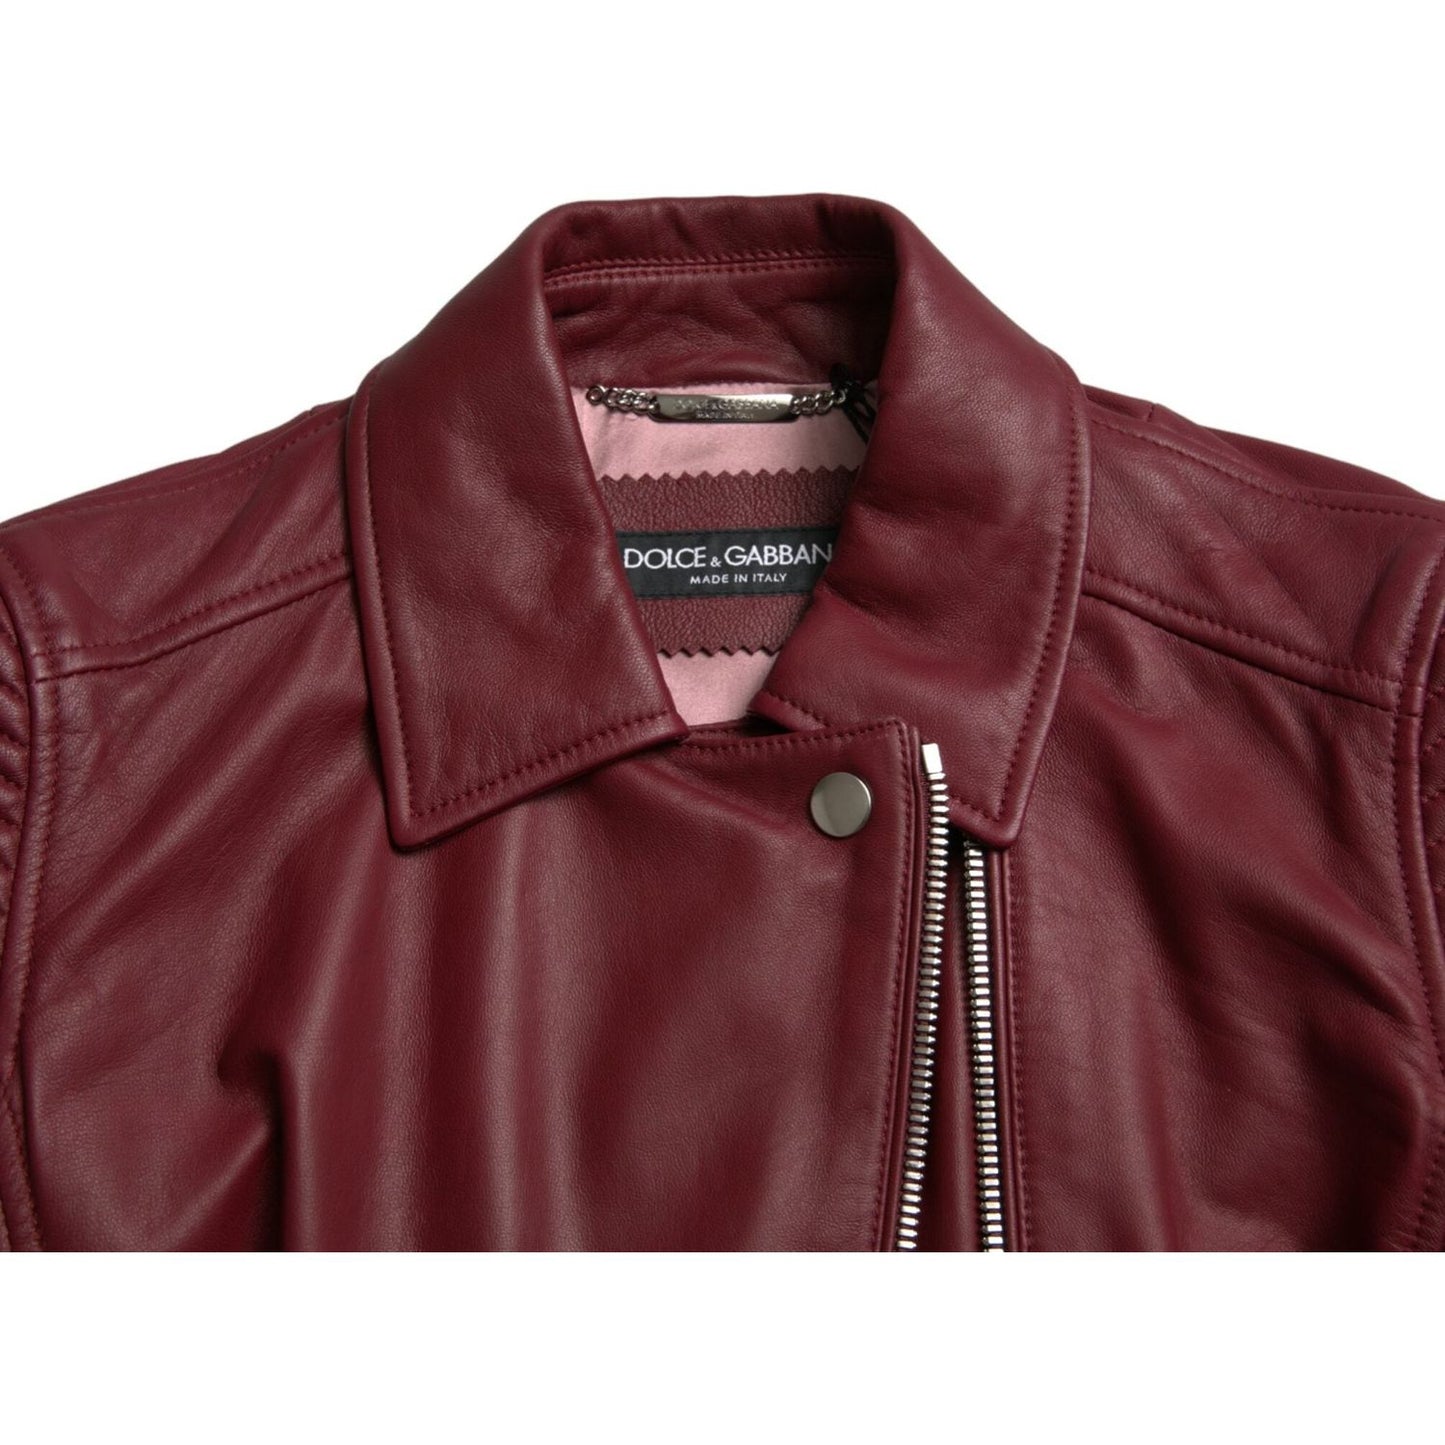 Dolce & Gabbana Bordeaux Biker Leather Jacket bordeaux-leather-biker-coat-lambskin-jacket 465A9341-BG-scaled-5d1591ec-6ea.jpg